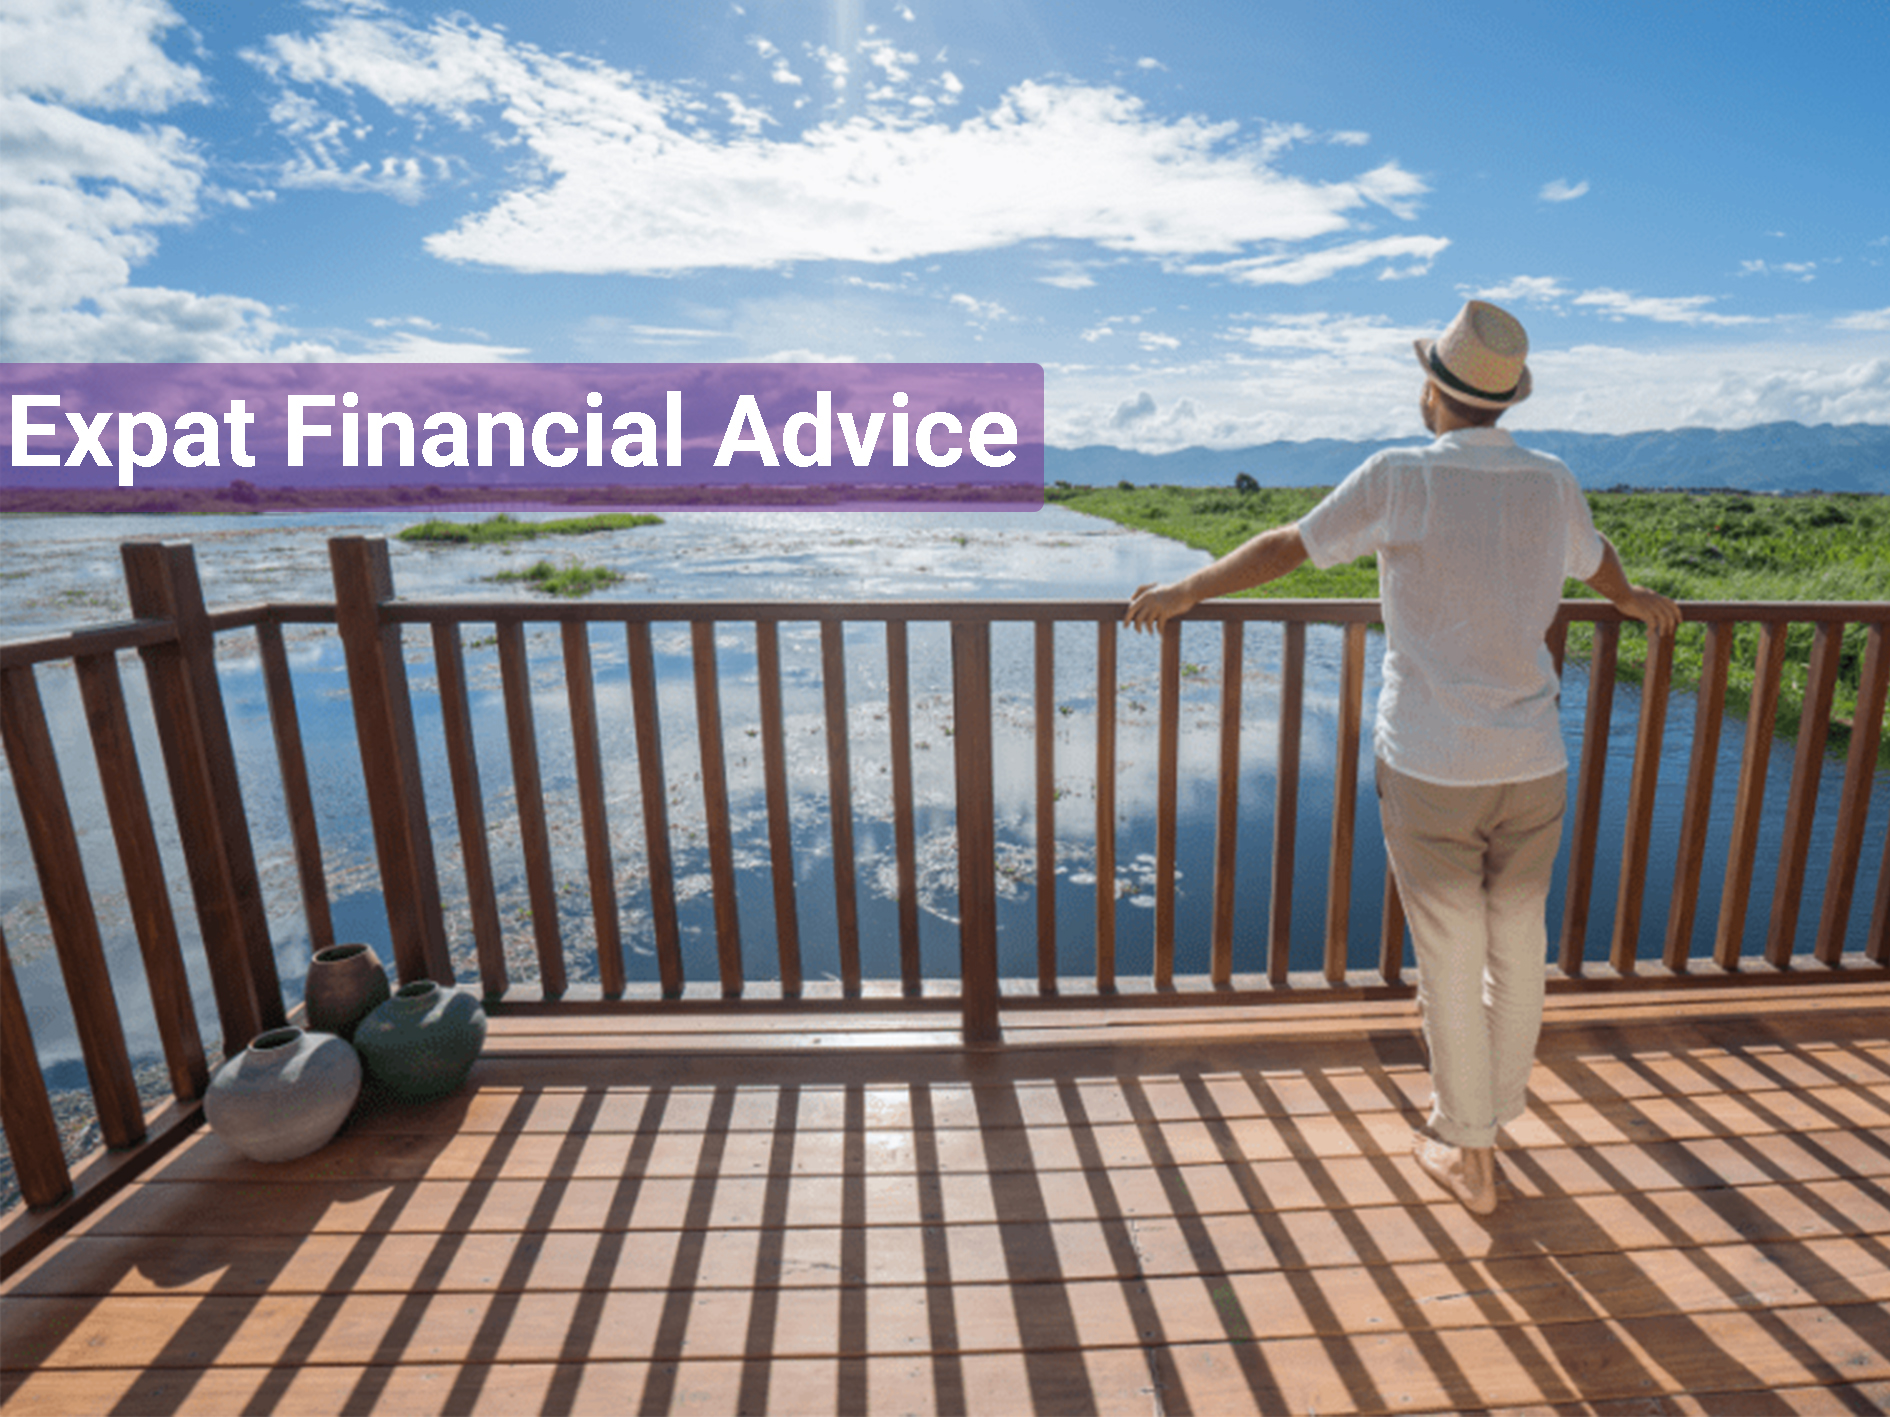 Expat Financial Advice